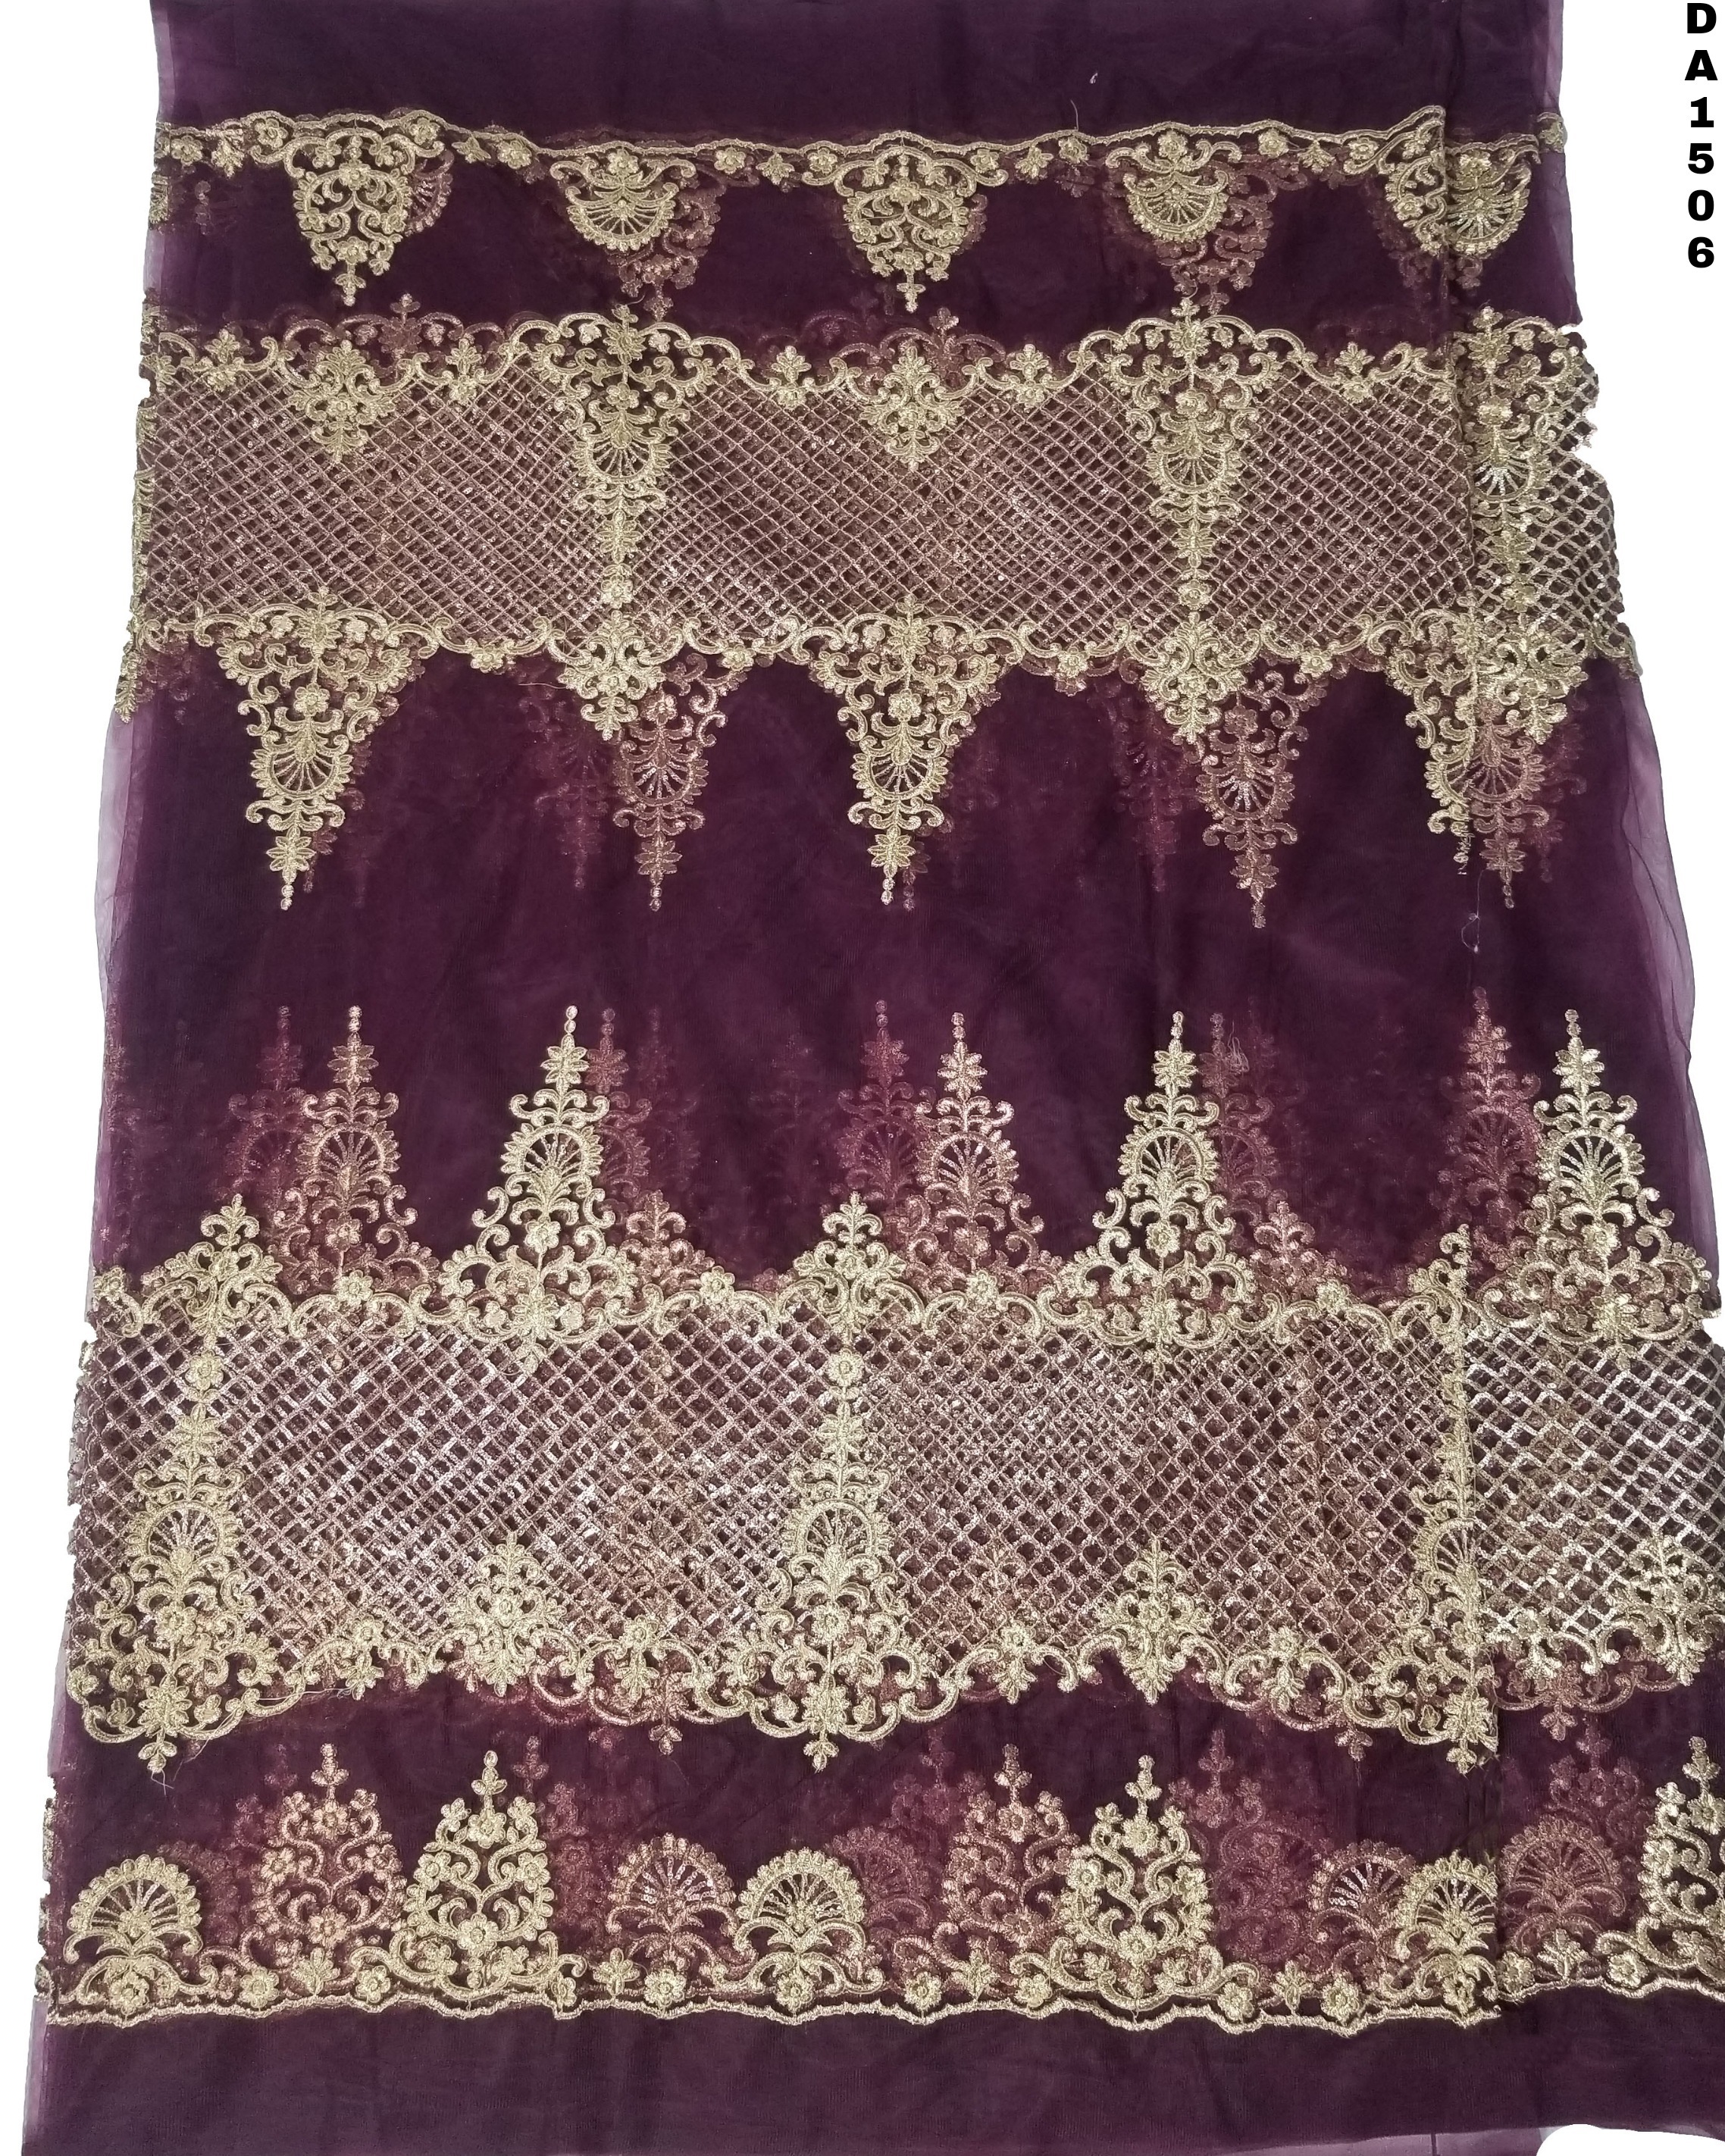 Stunning Net Embroidery Fabric